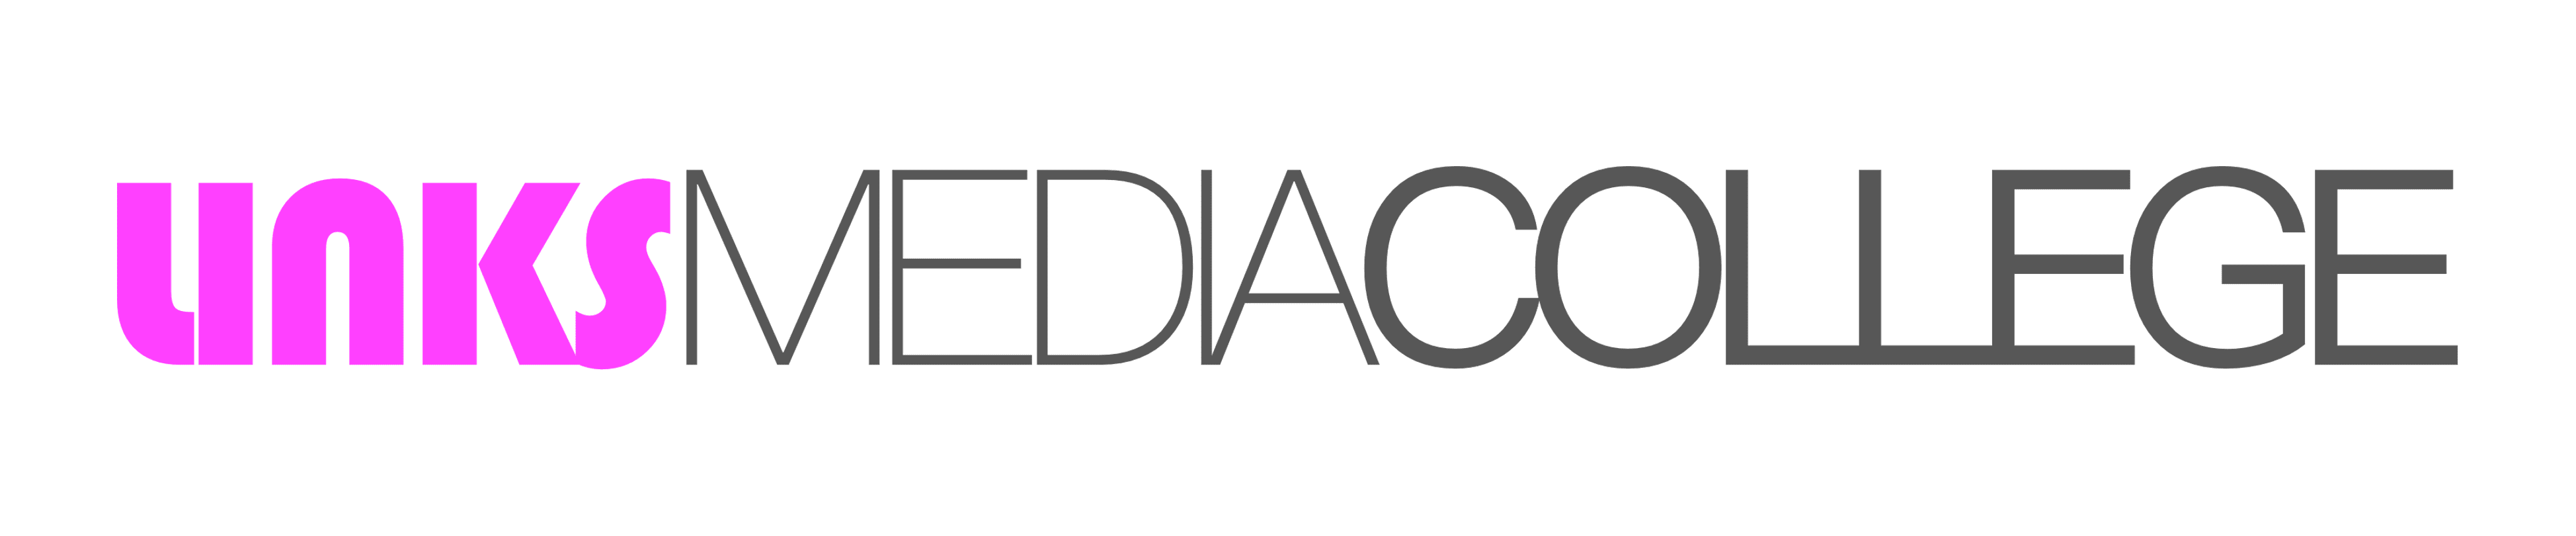 Links Media College service logo